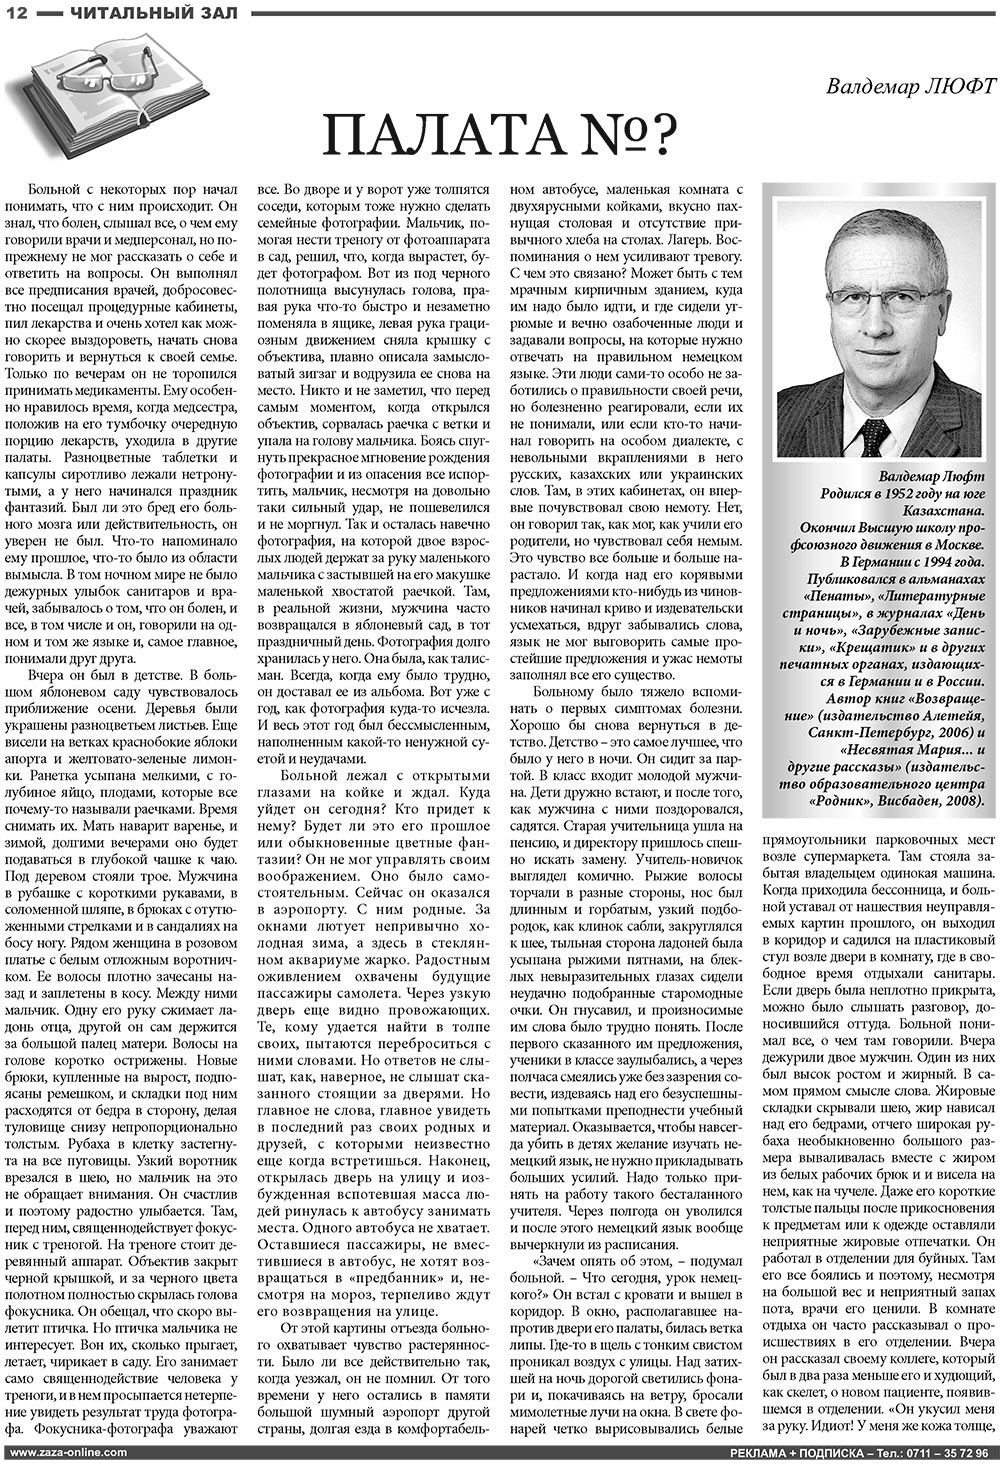 Известия BW (газета). 2008 год, номер 10, стр. 12